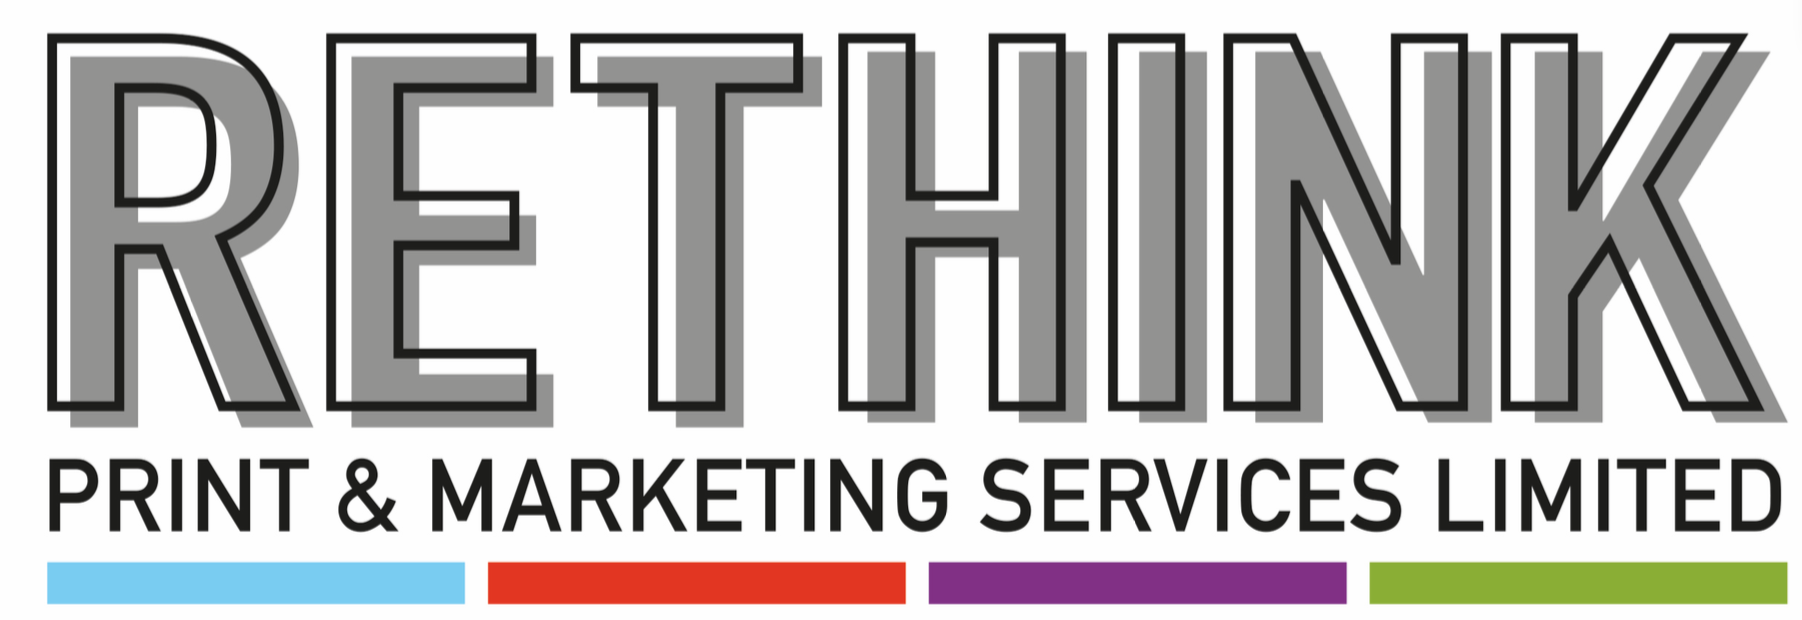 Rethink Print and Marketing Services Ltd